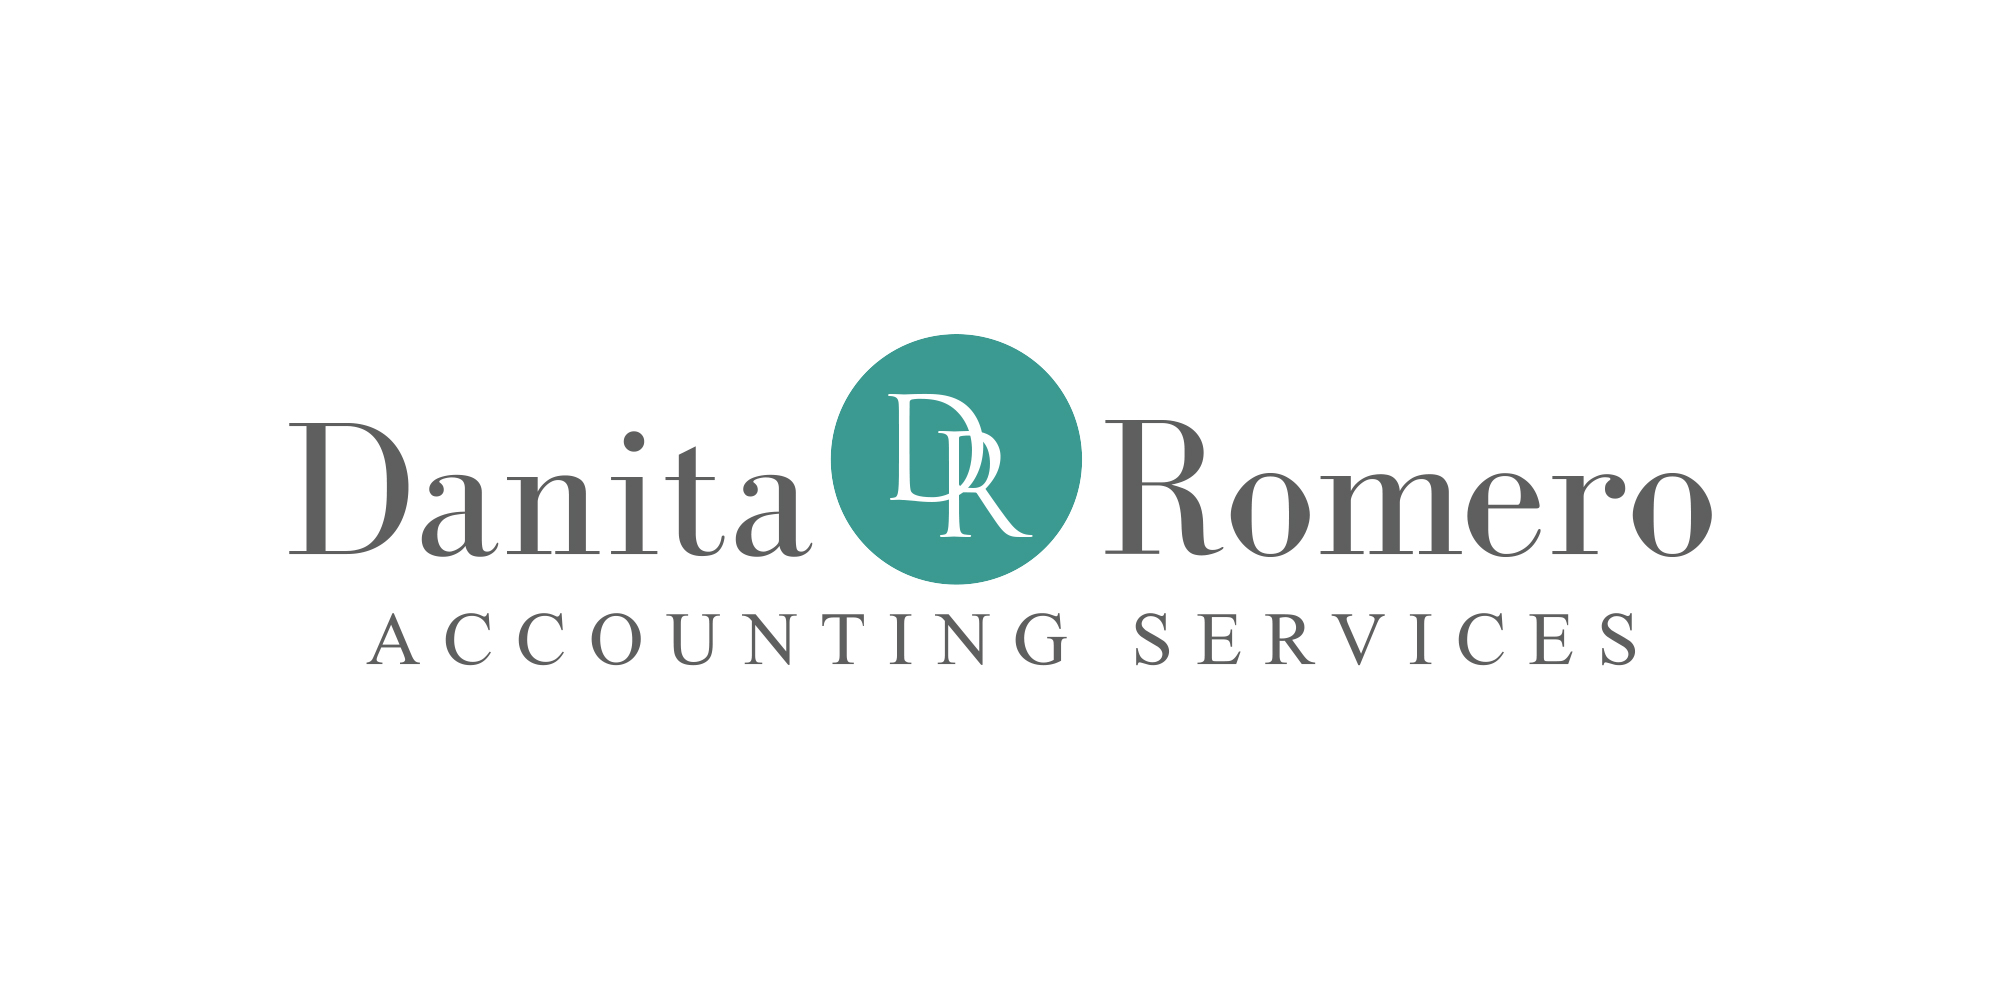 Danita Romero, Accounting Services